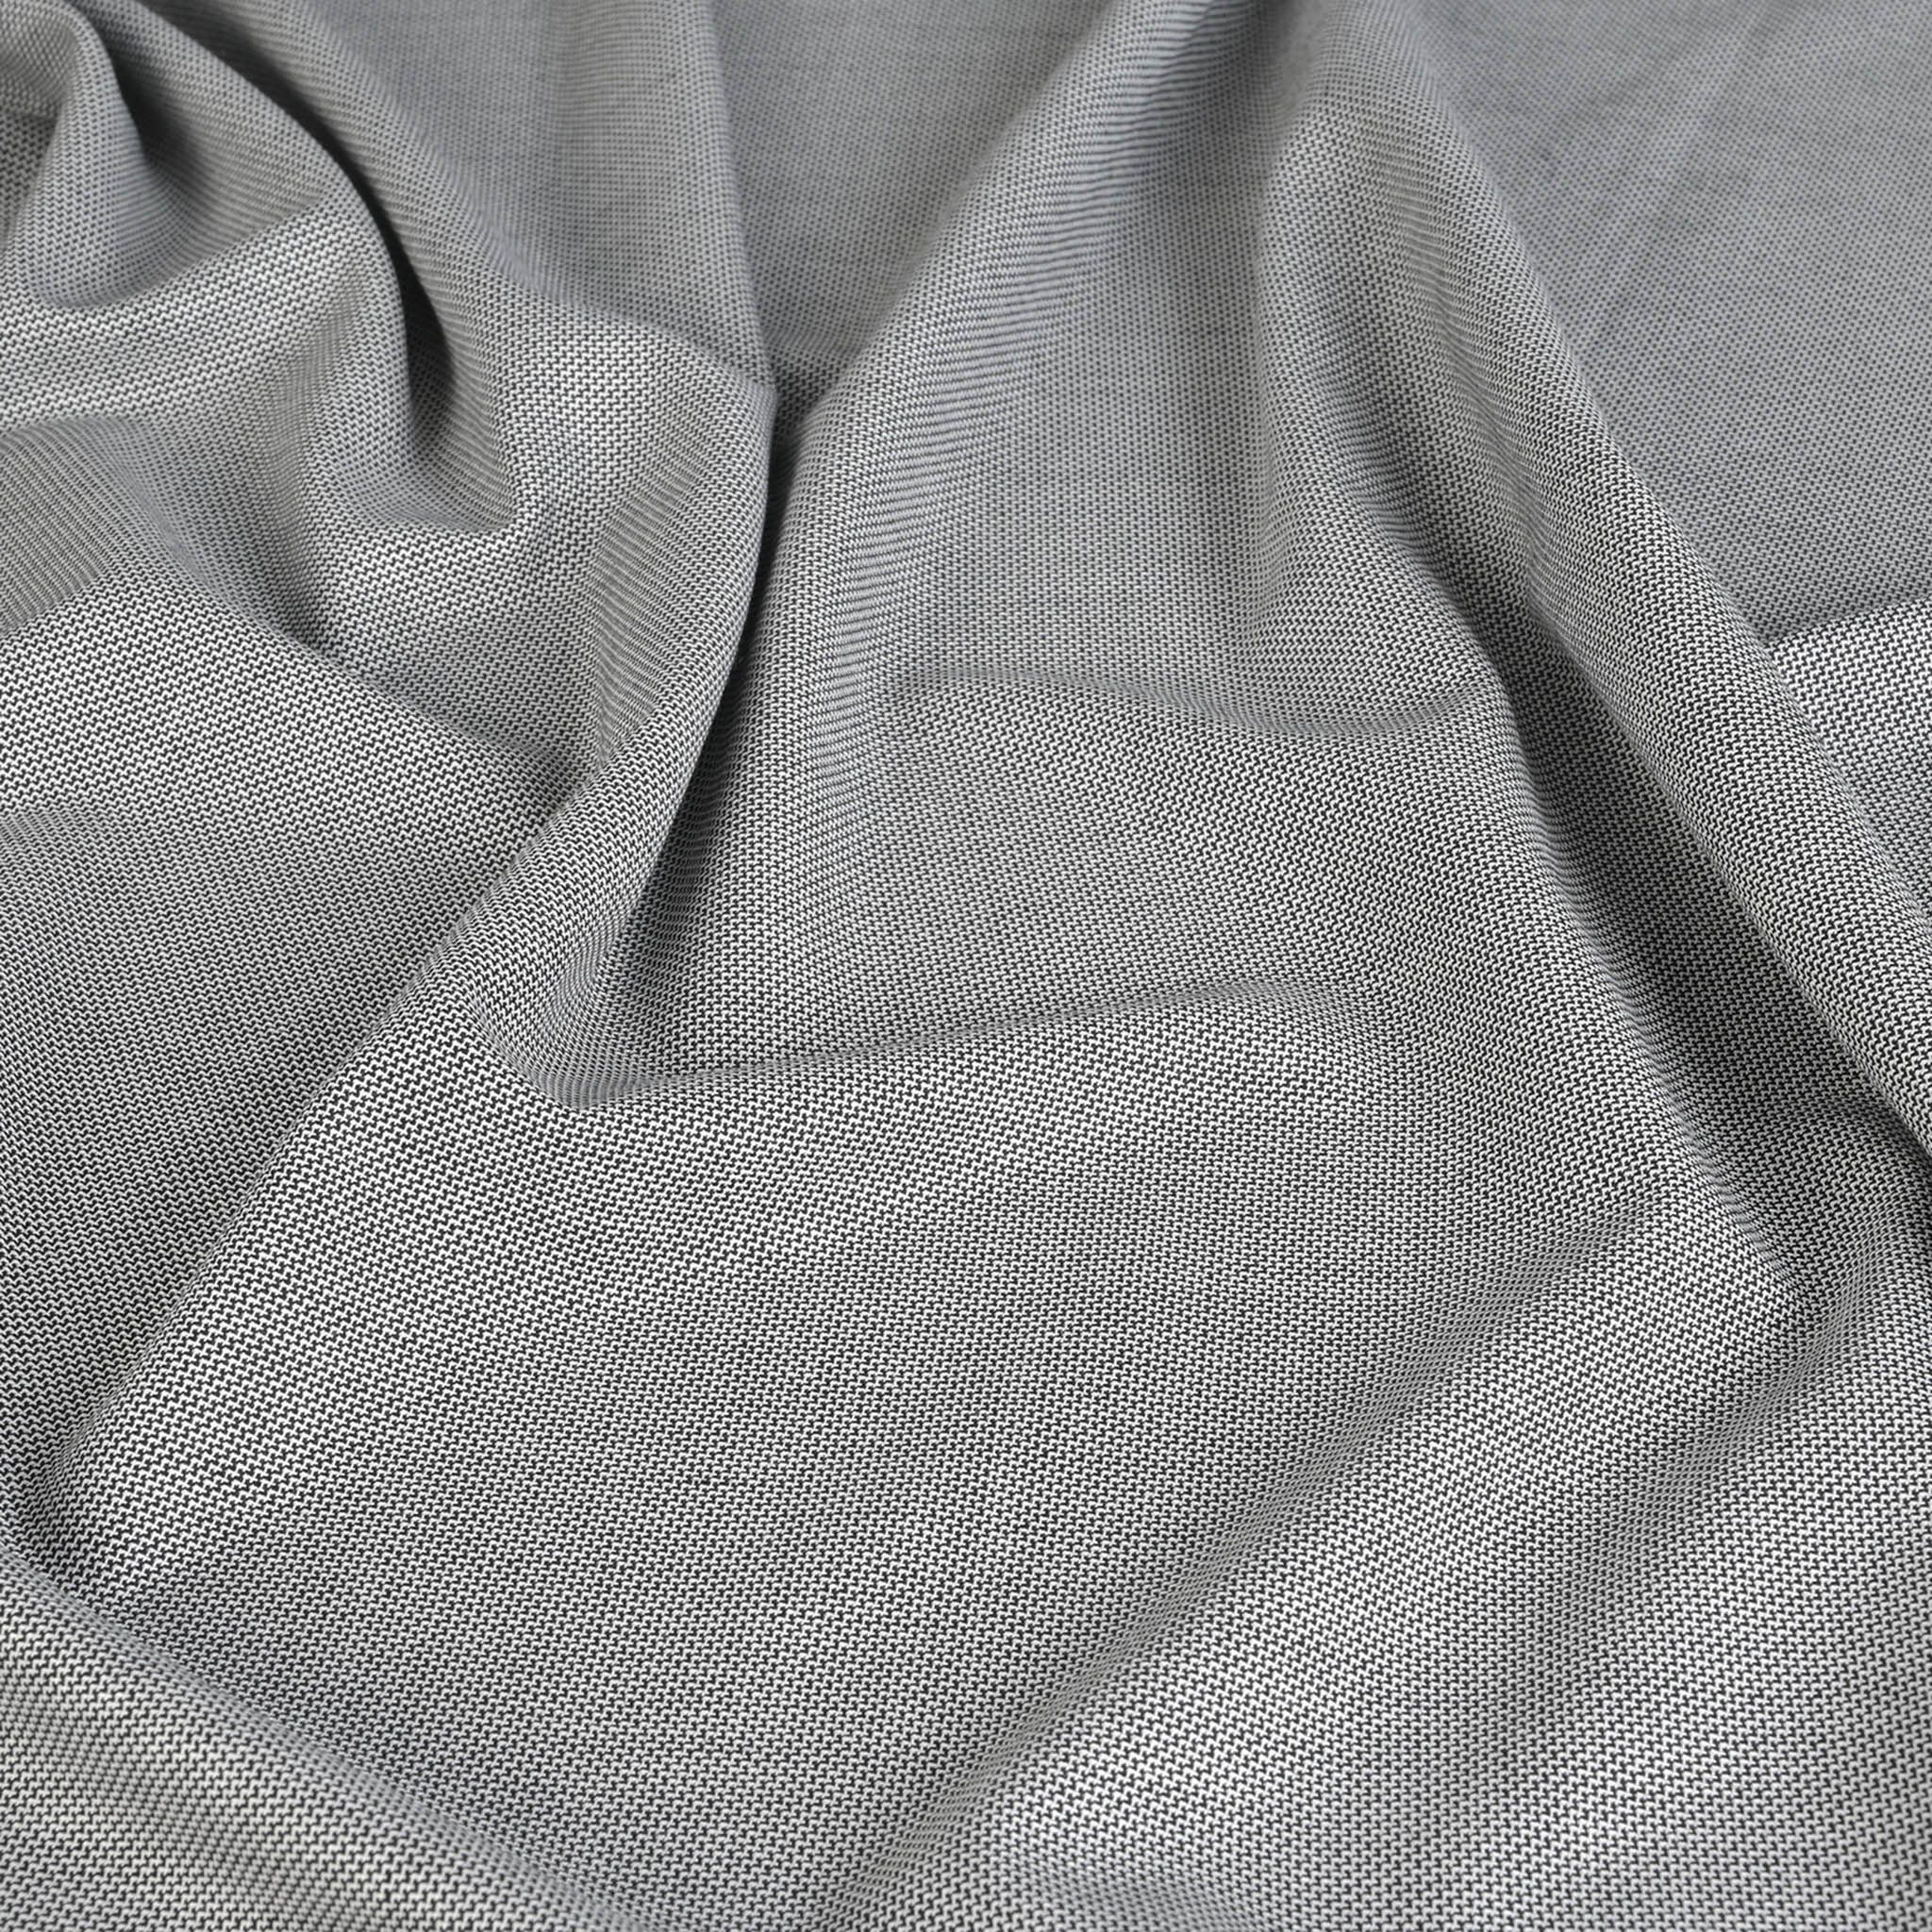 Black and White Micro Jacquard 2459 - Fabrics4Fashion